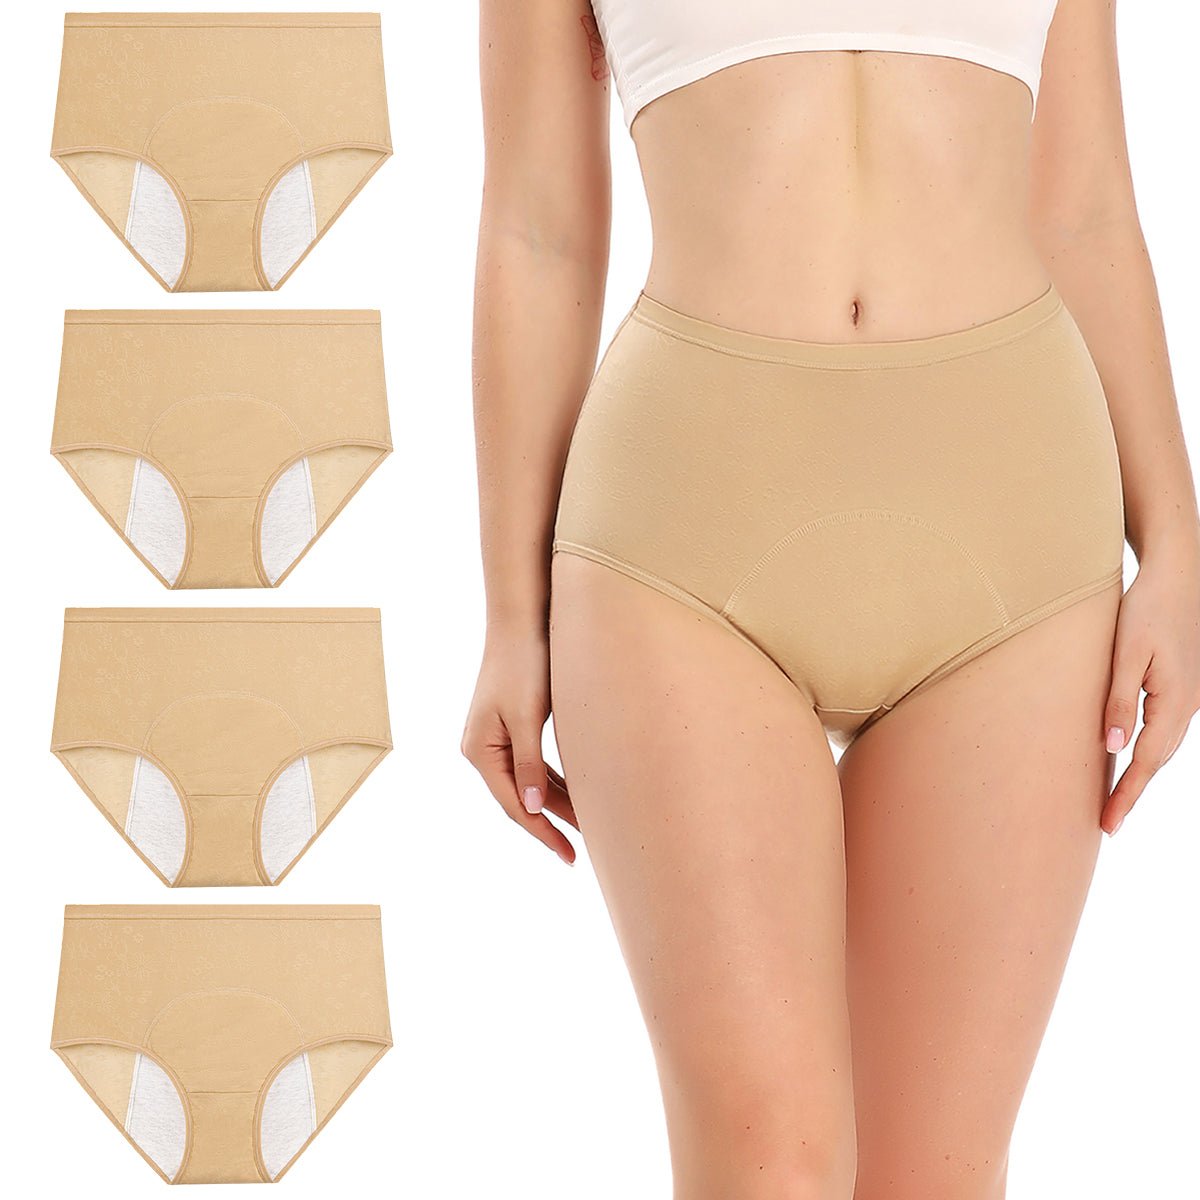 Anrpo Period Underwear for Women, High Waist Leak-Proof Postpartum  Menstrual Panties Ladies Protective Briefs - 4 Pack (L,4 Color)